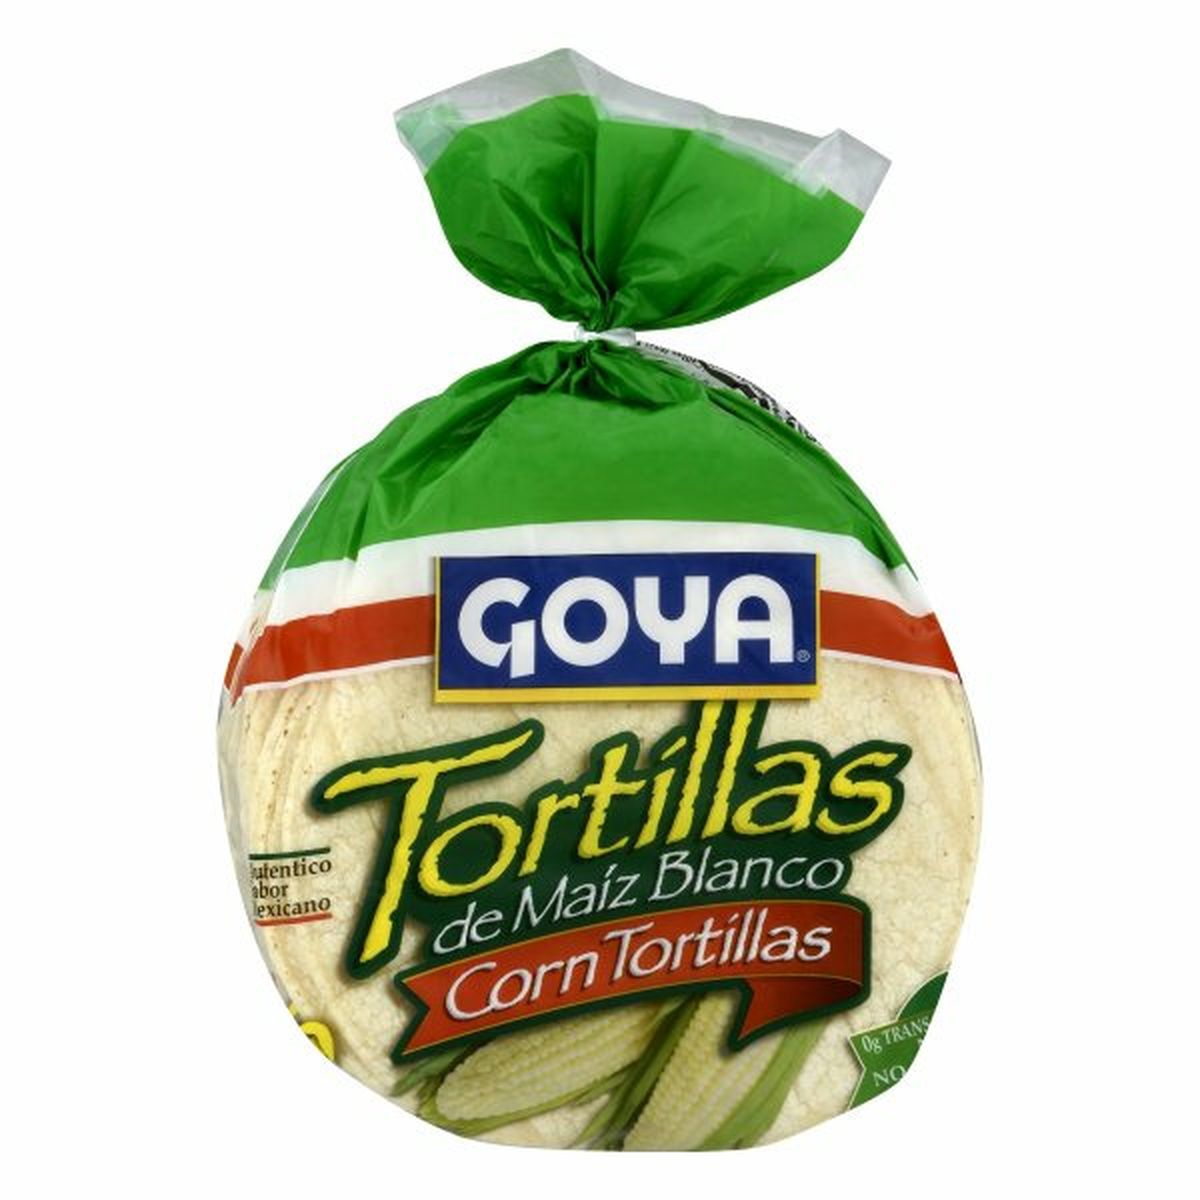 Calories in Goya Tortillas, Corn